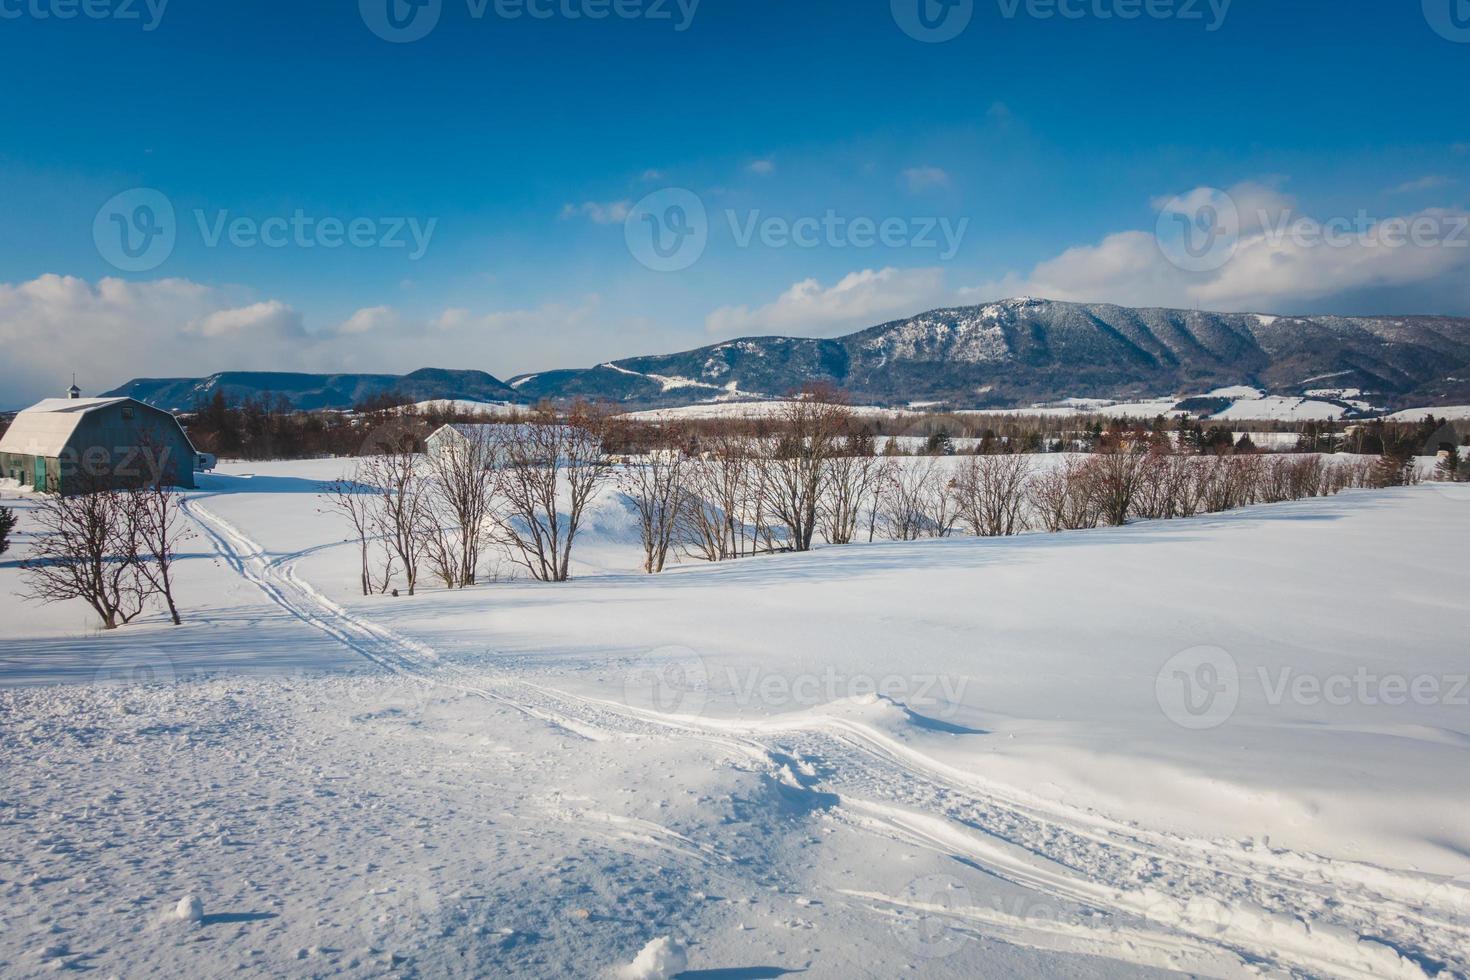 carleton st-joseph berg under vintern foto